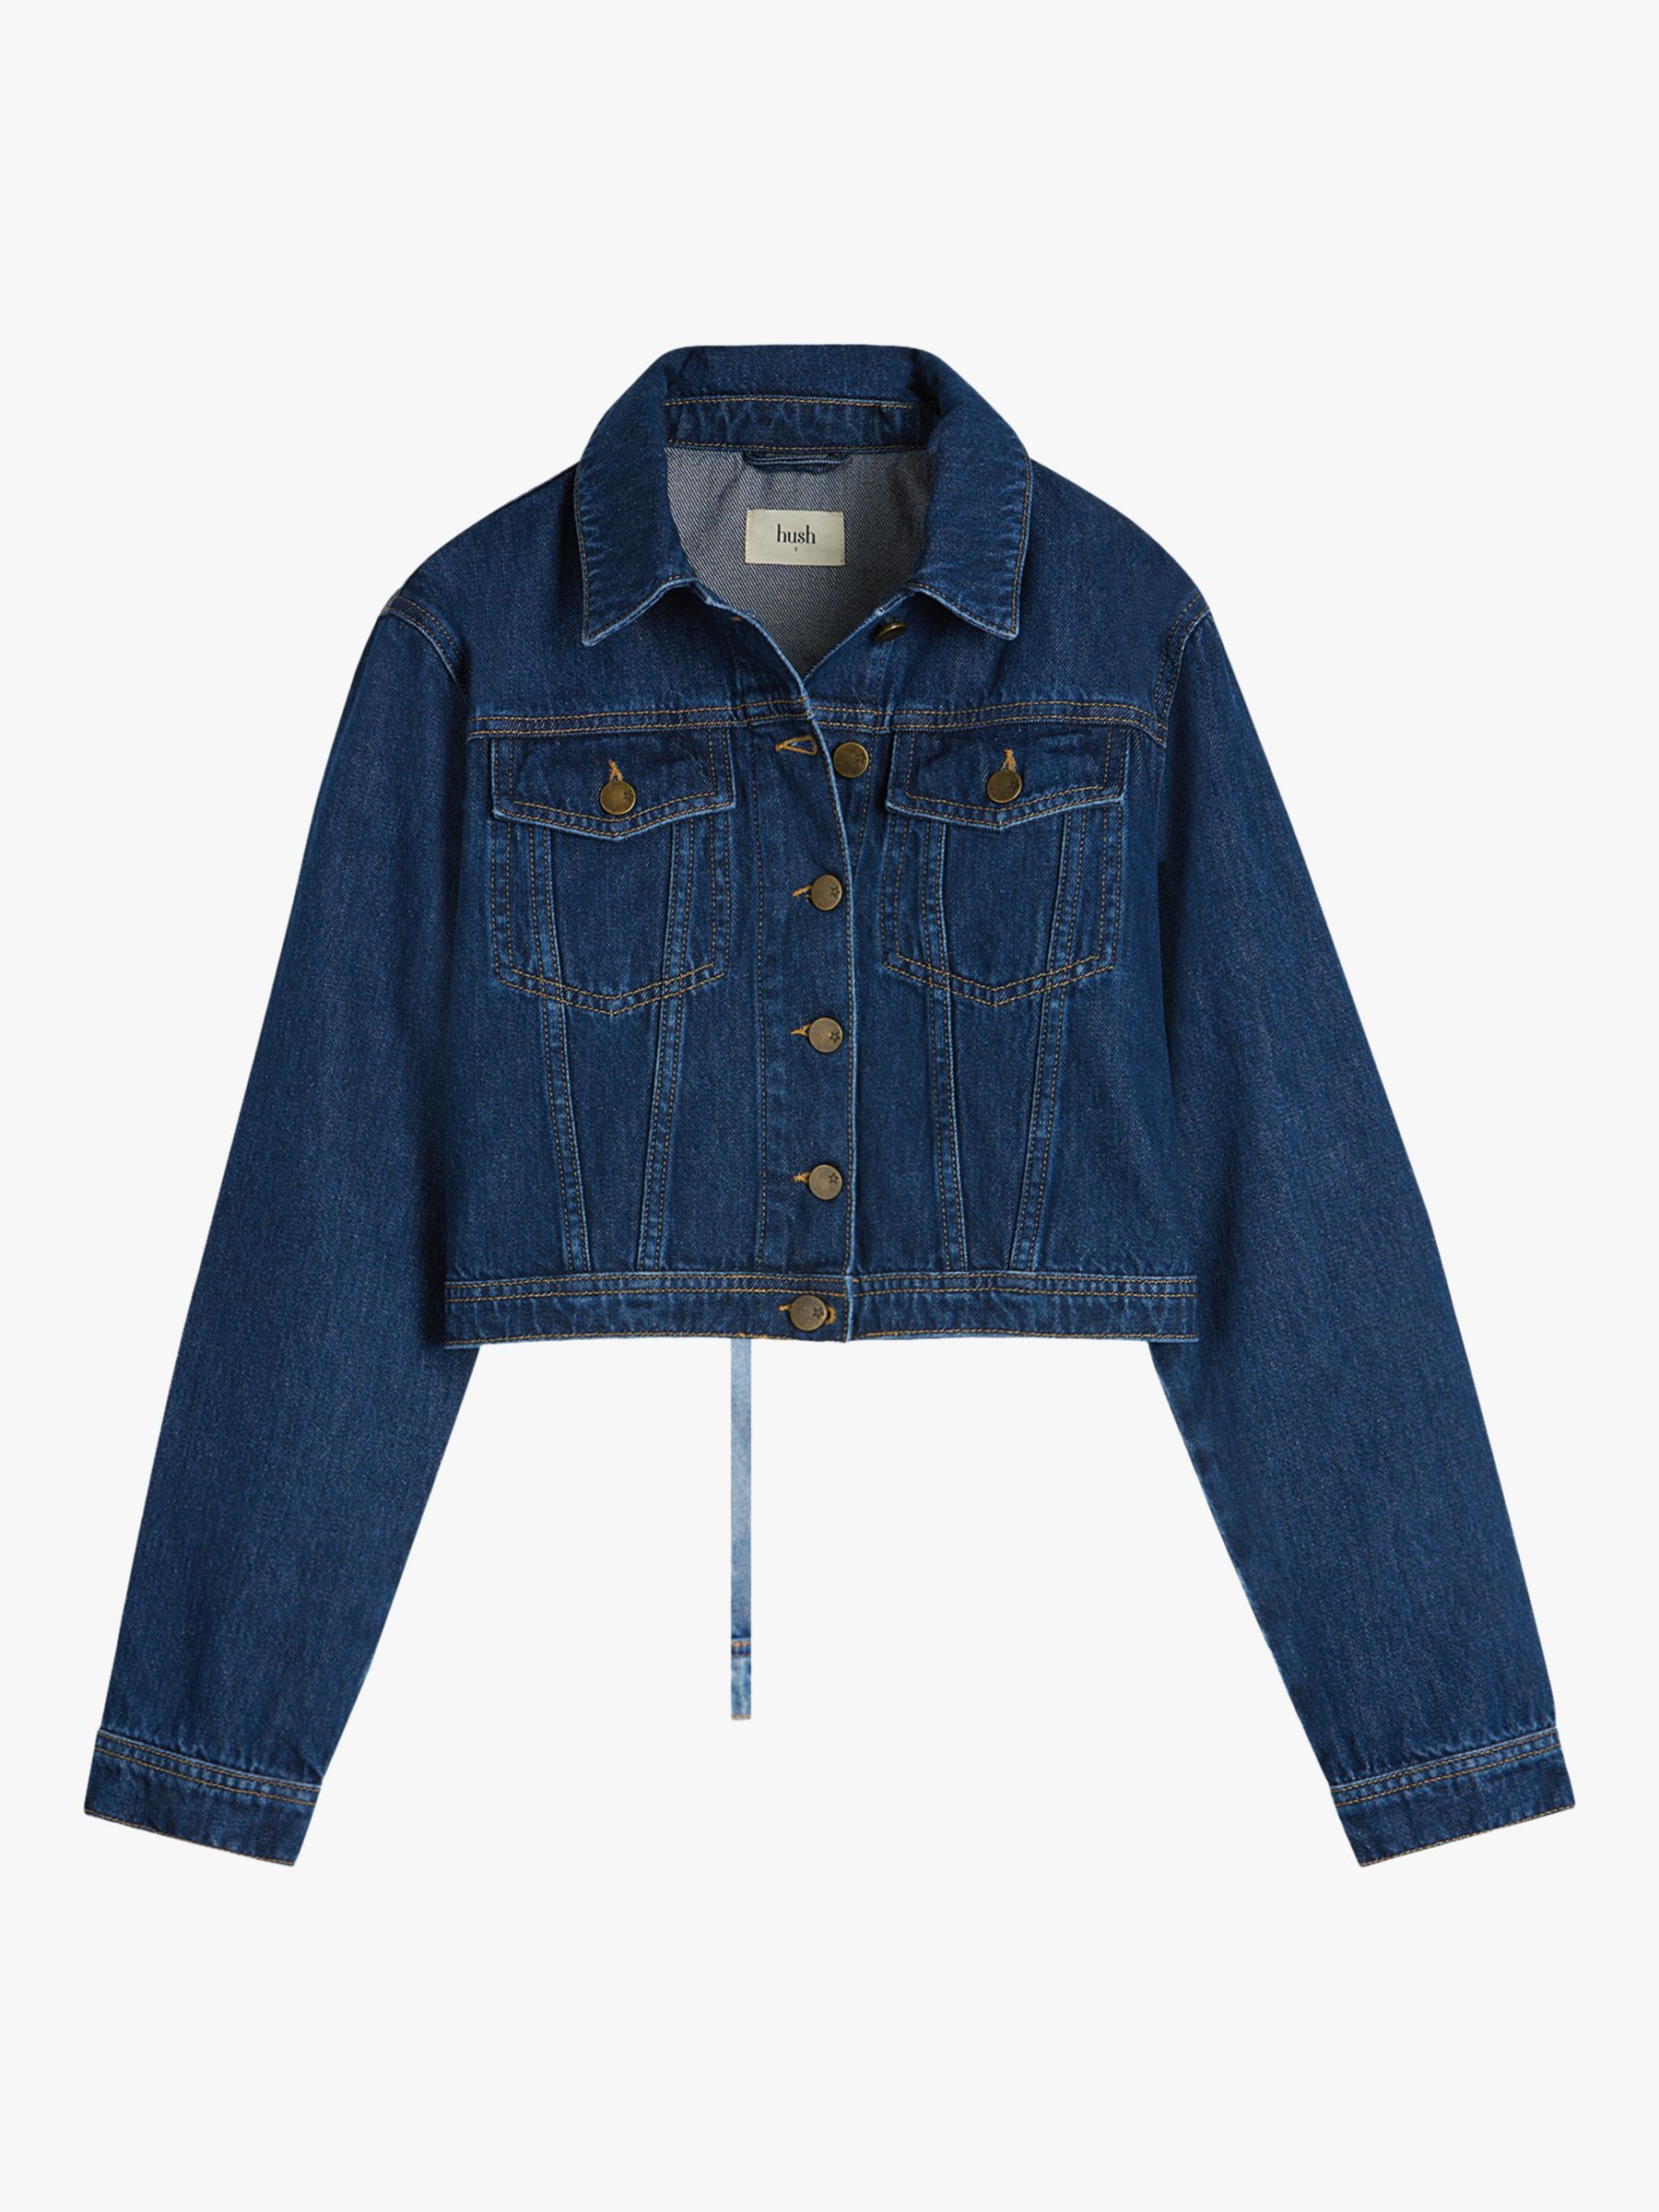 HUSH Ciara Cropped Denim Jacket, Authentic Blue at John Lewis & Partners